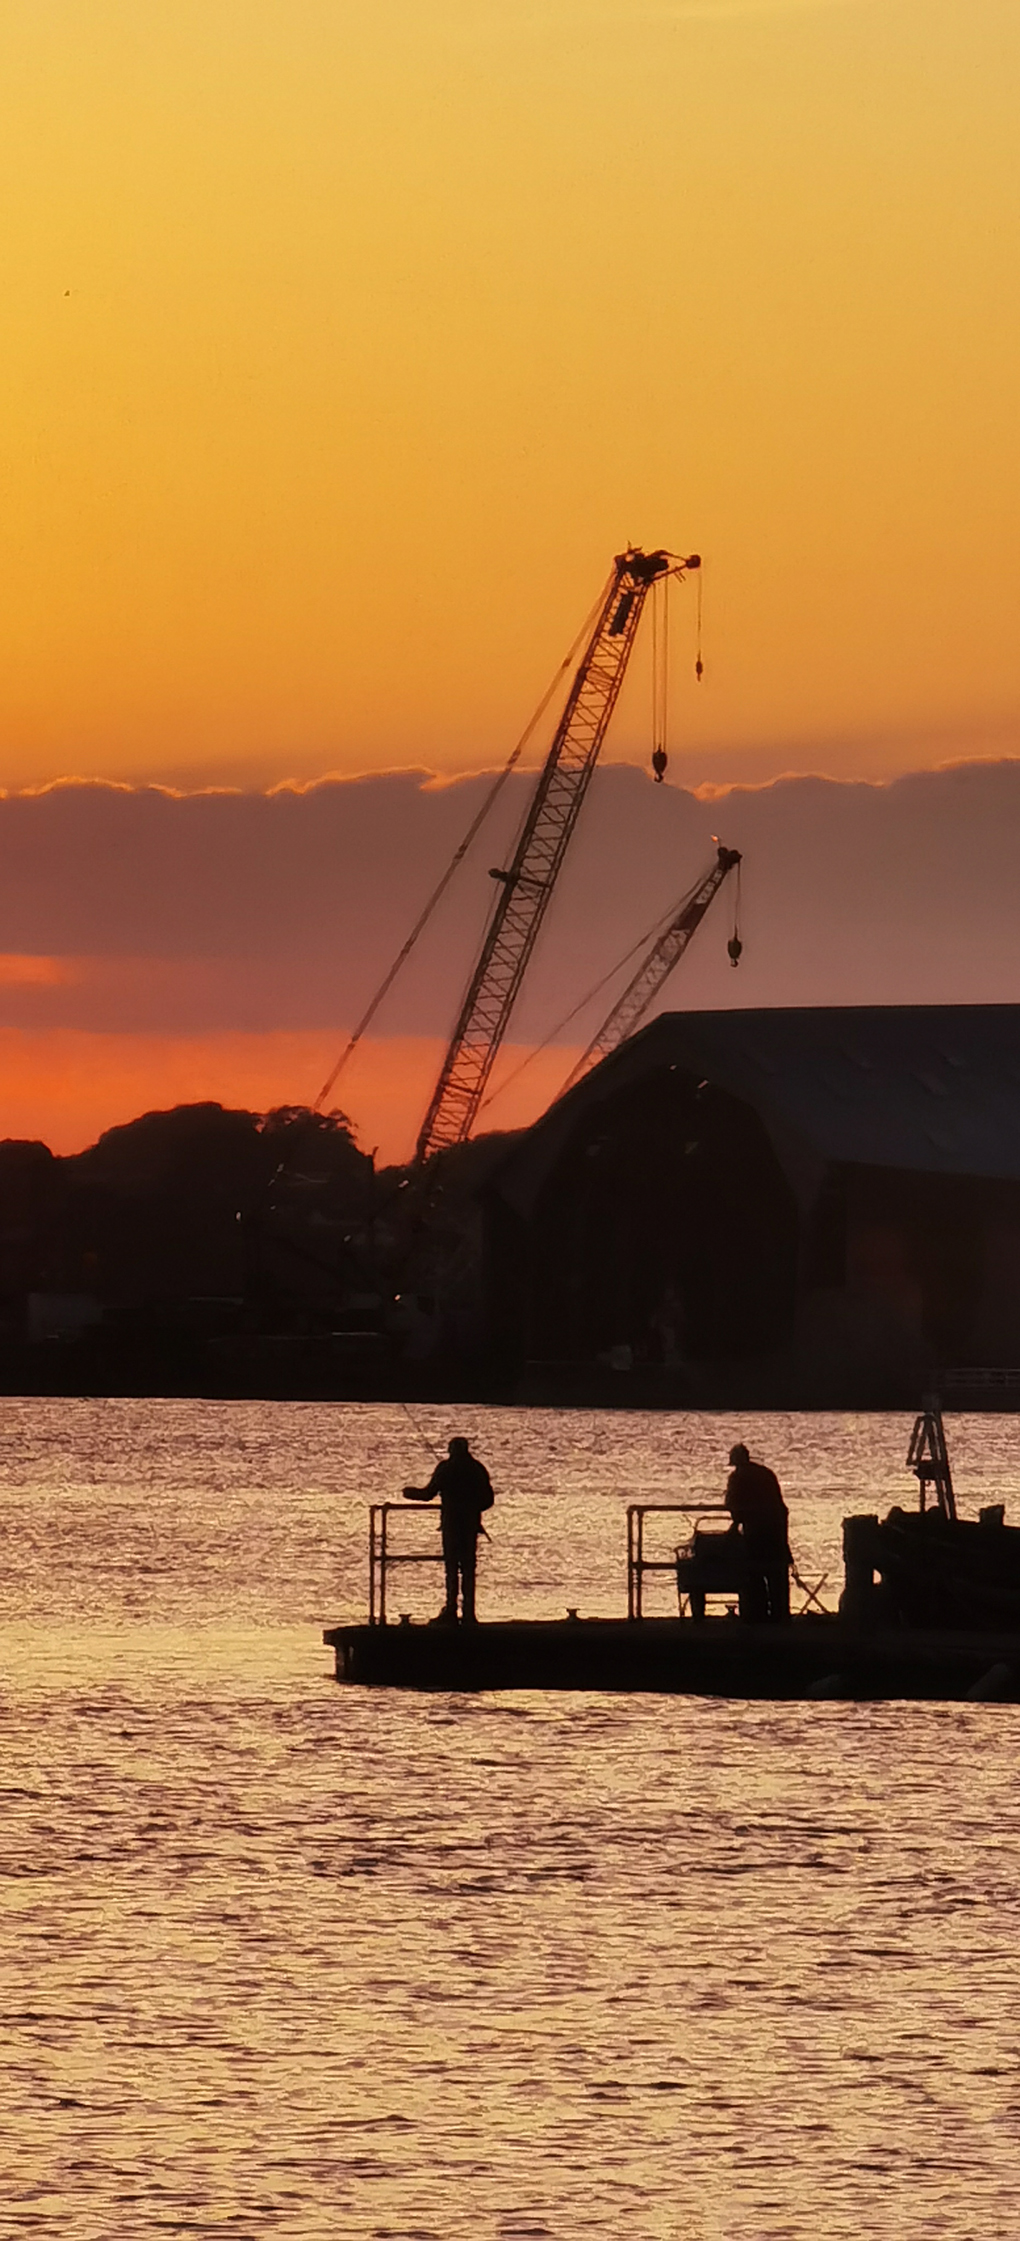 Amazing sunset over fishermen and cranes